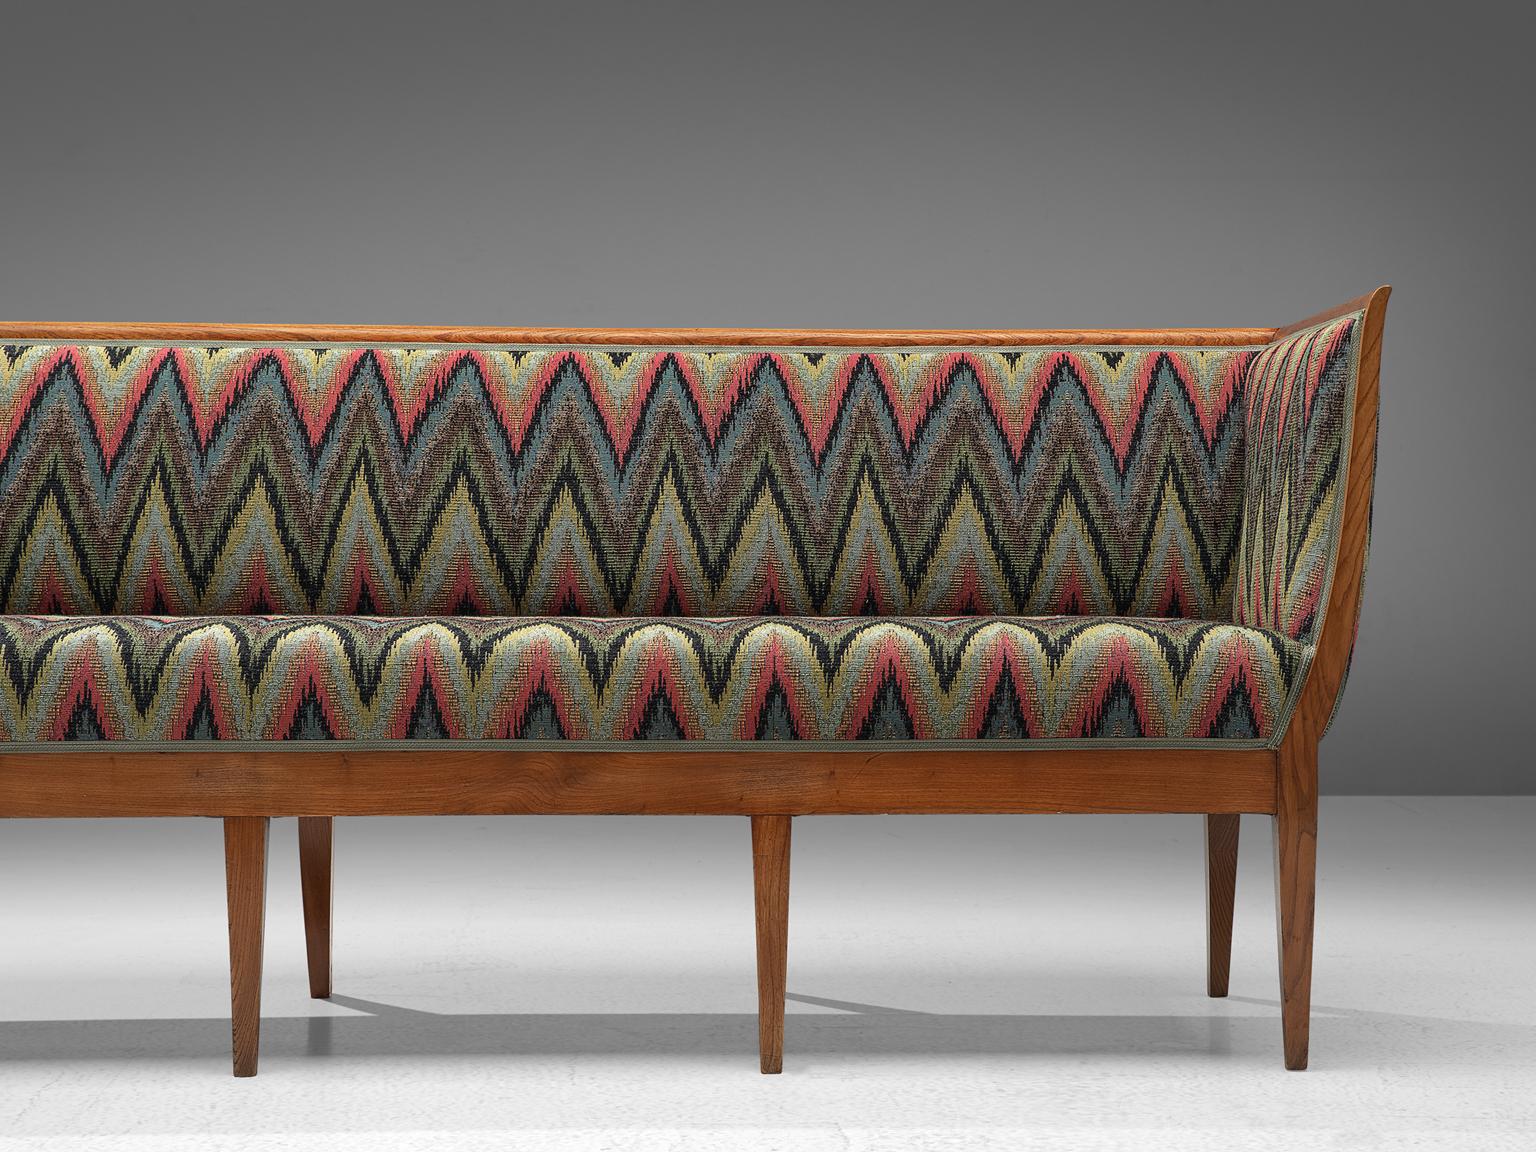 Scandinavian Art Deco Sofa Reupholstered in Multicolored Woven Fabric